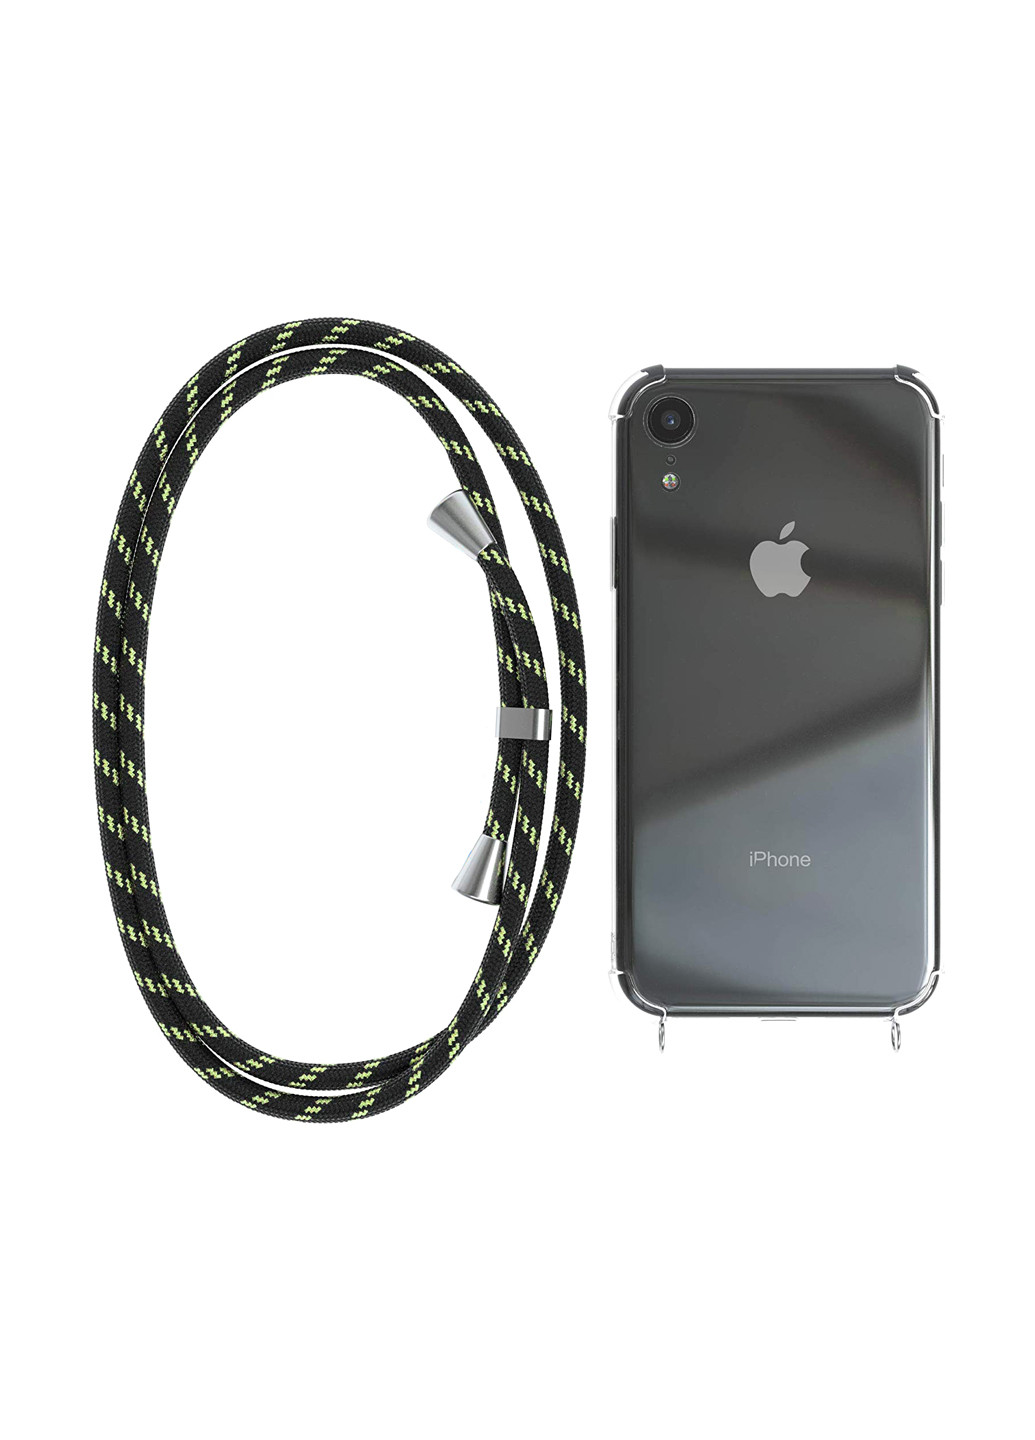 Силиконовый чехол Strap для Huawei Y6 2019 Black-Green (704277) BeCover strap для huawei y6 2019 black-green (704277) (154454133)